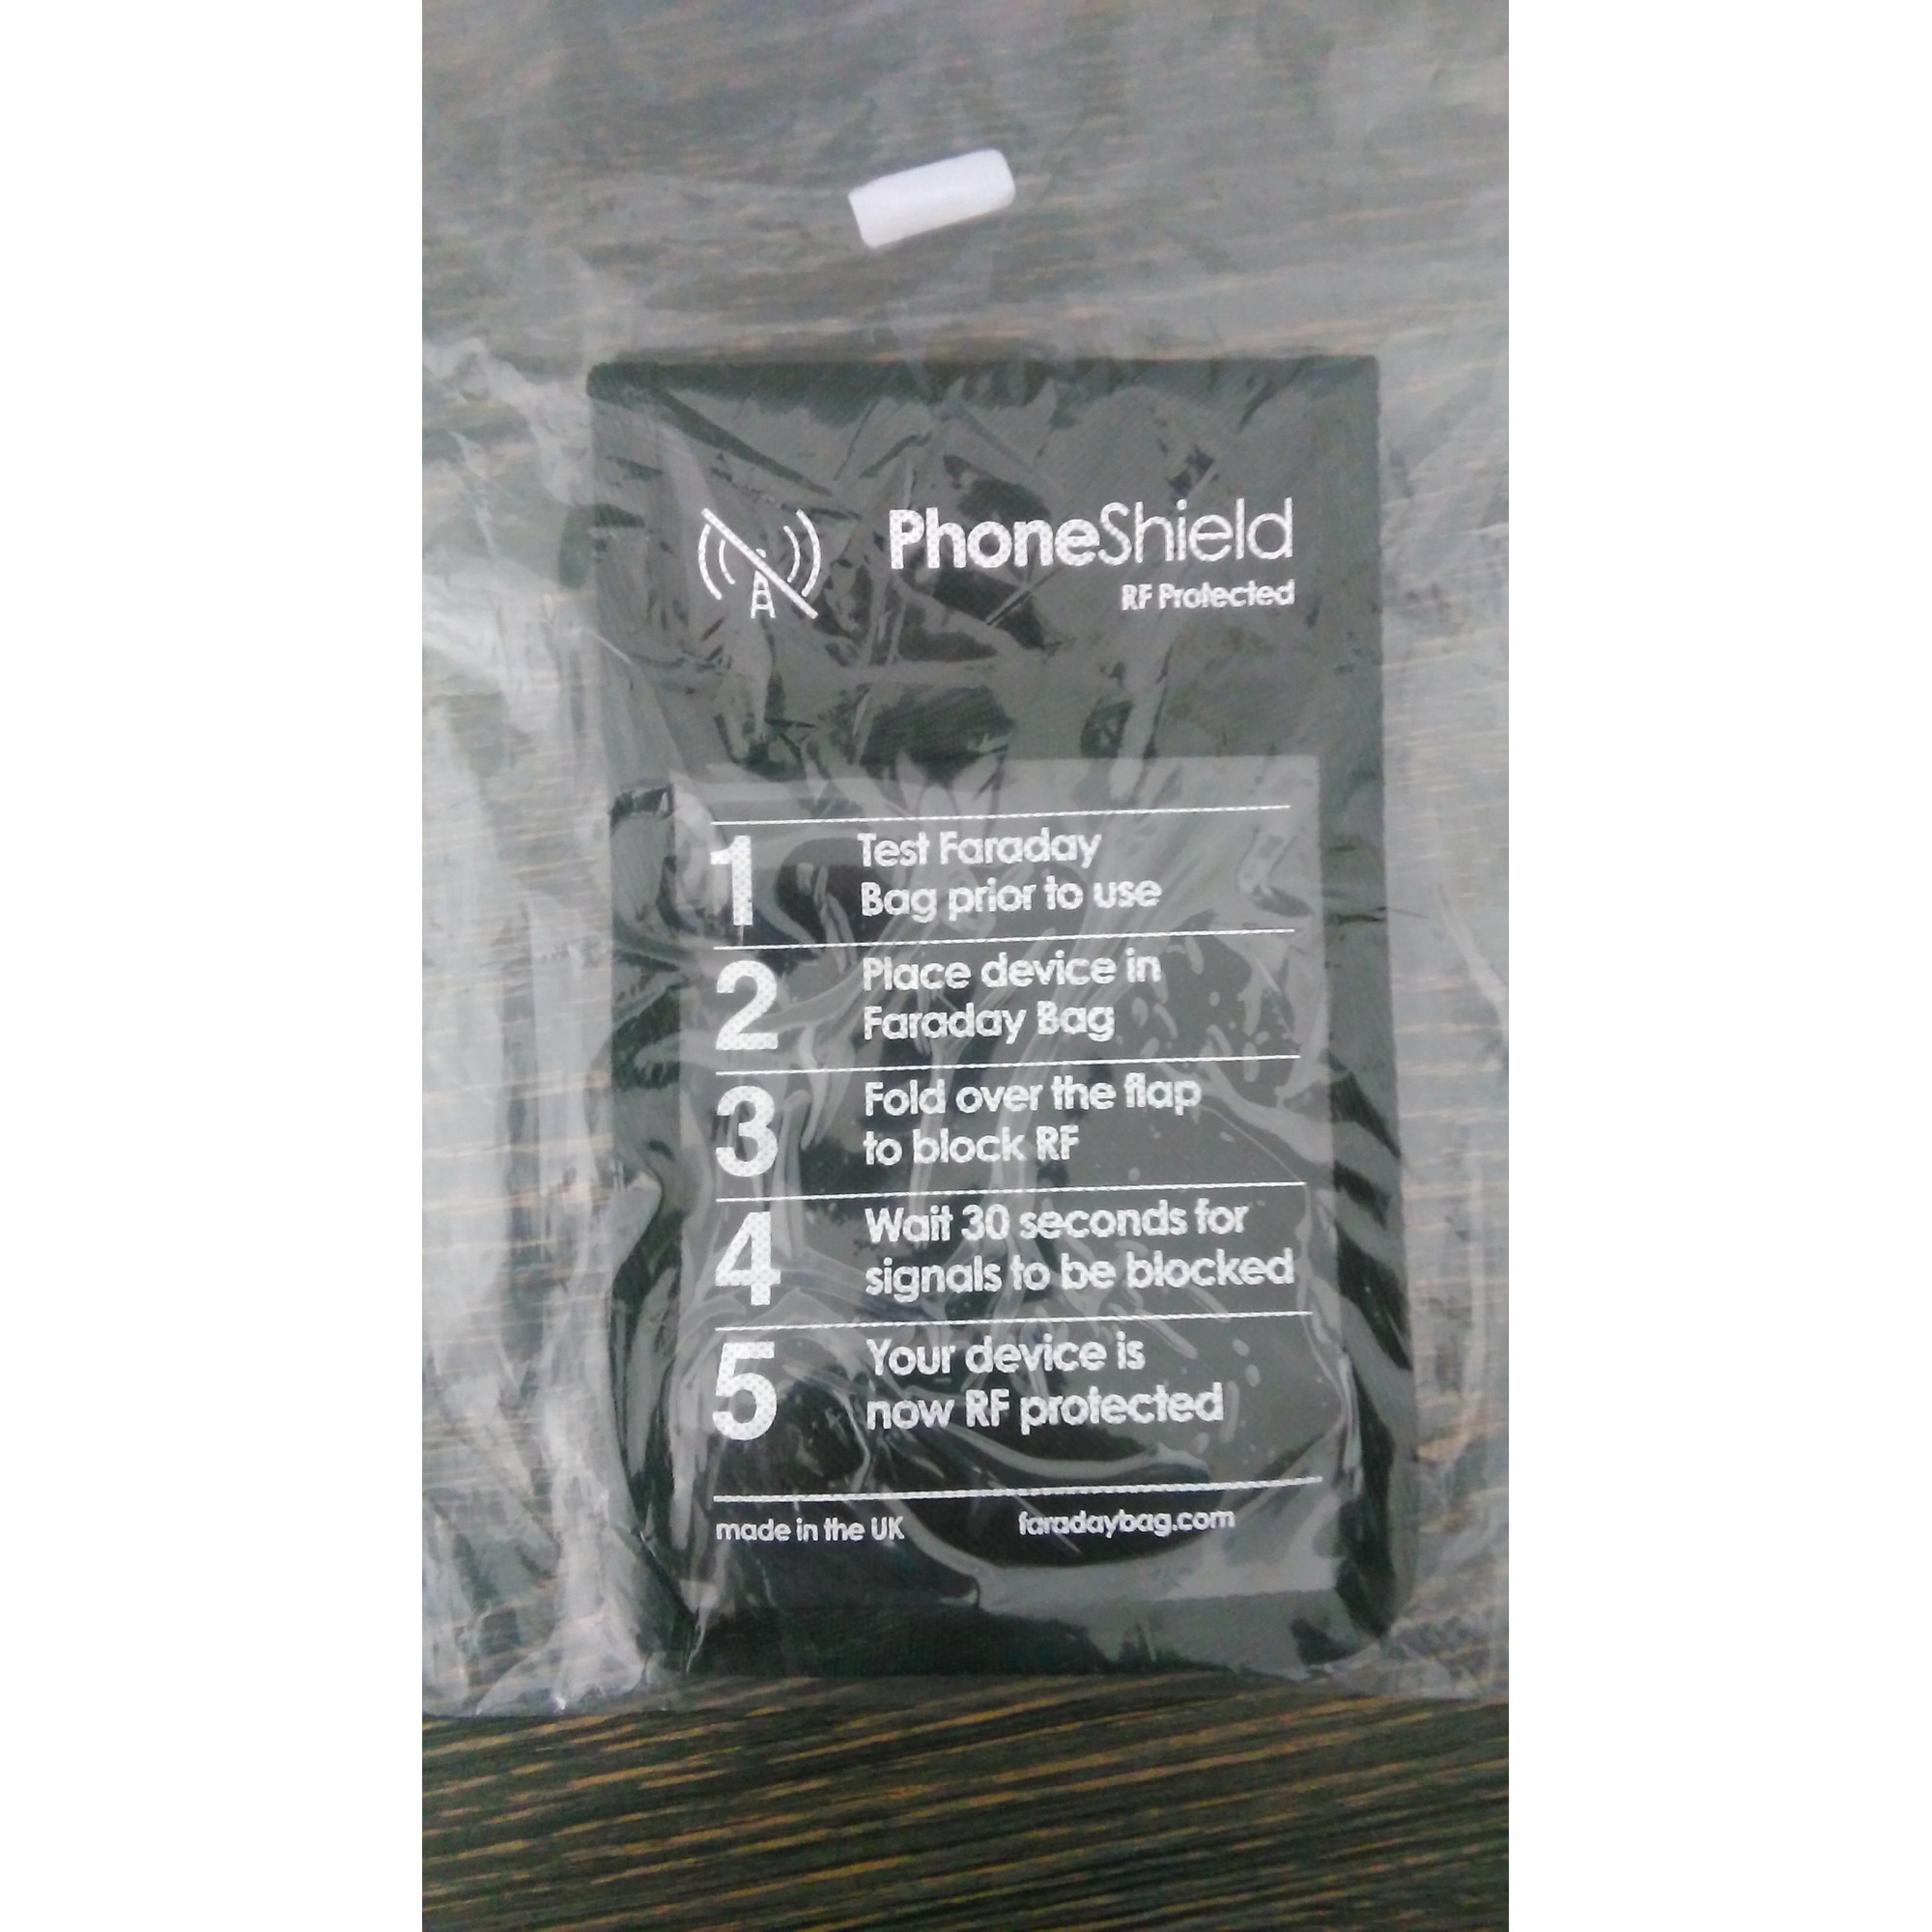 Disklabs Phone-Shield Bag (Lab Edition) PS2 - Teel